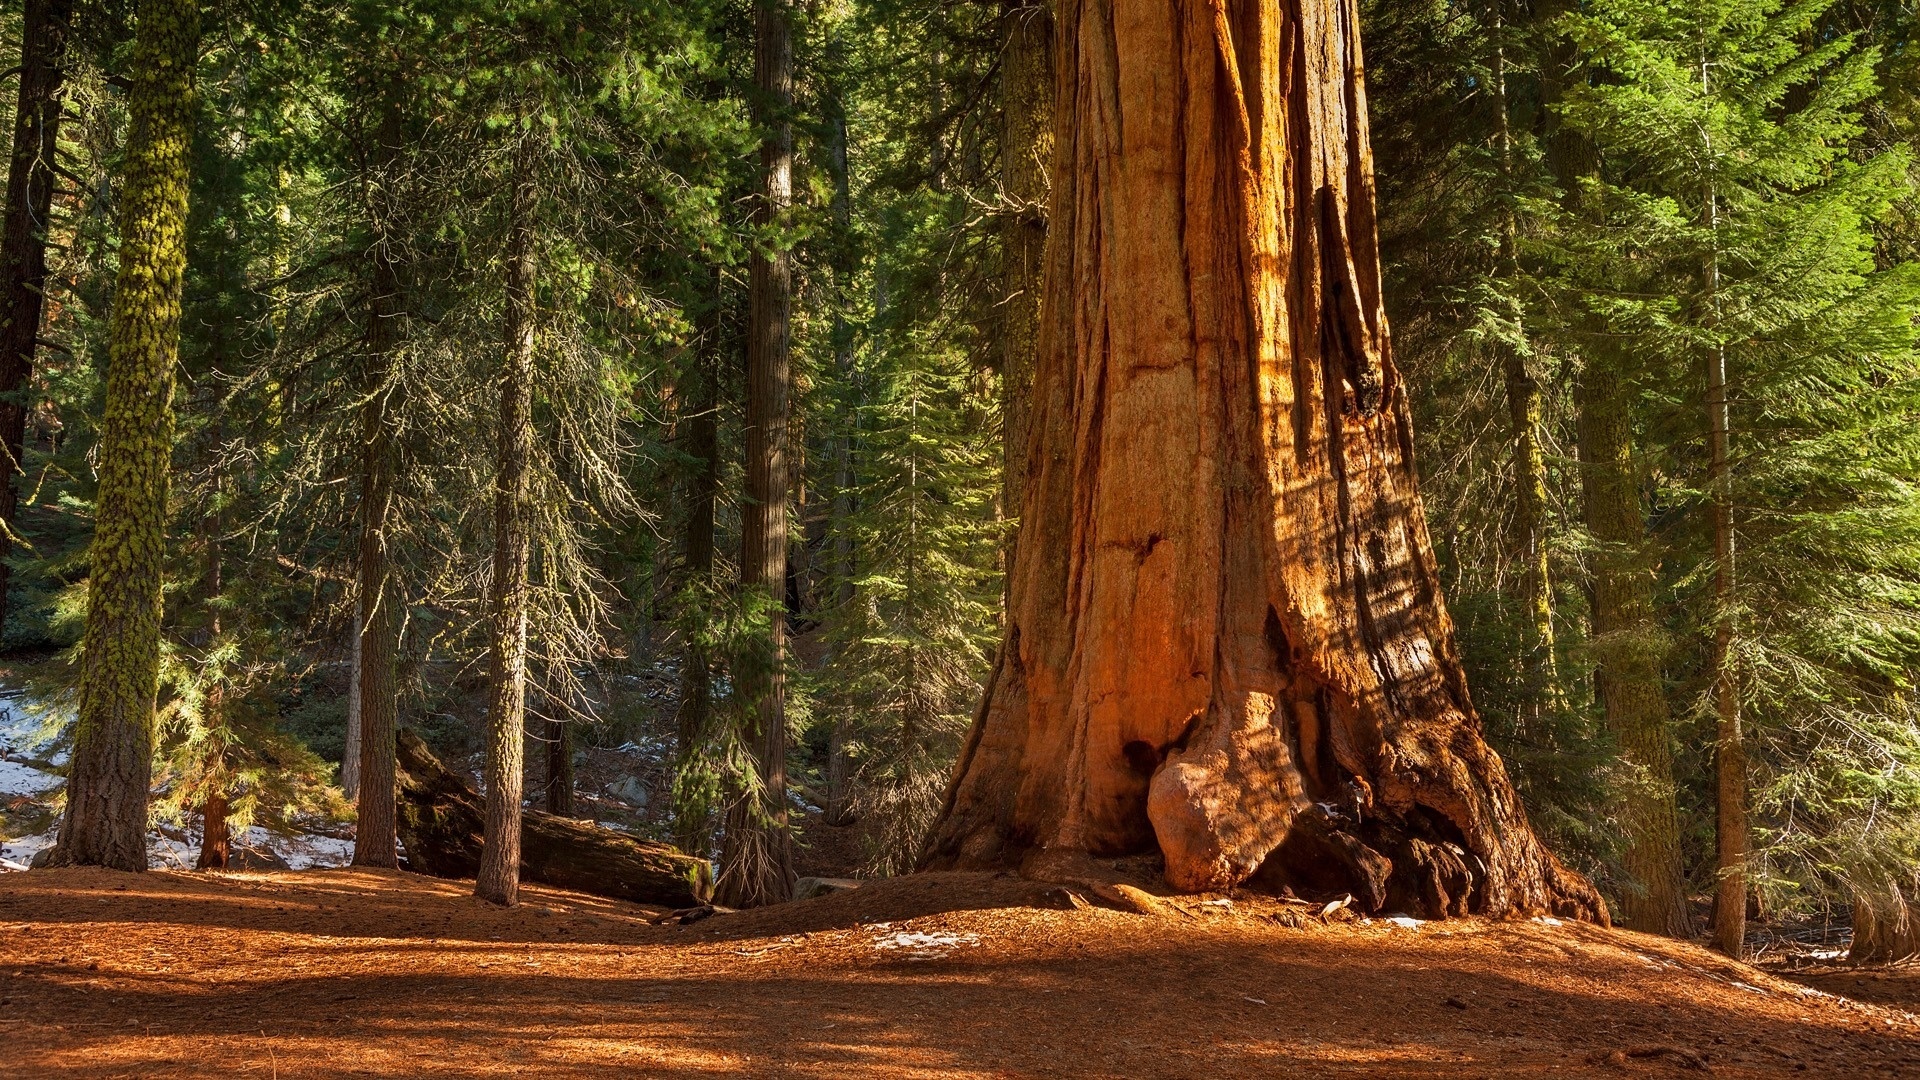 Redwood forest beauty, HD wallpapers, Magical ambiance, Nature's splendor, 1920x1080 Full HD Desktop